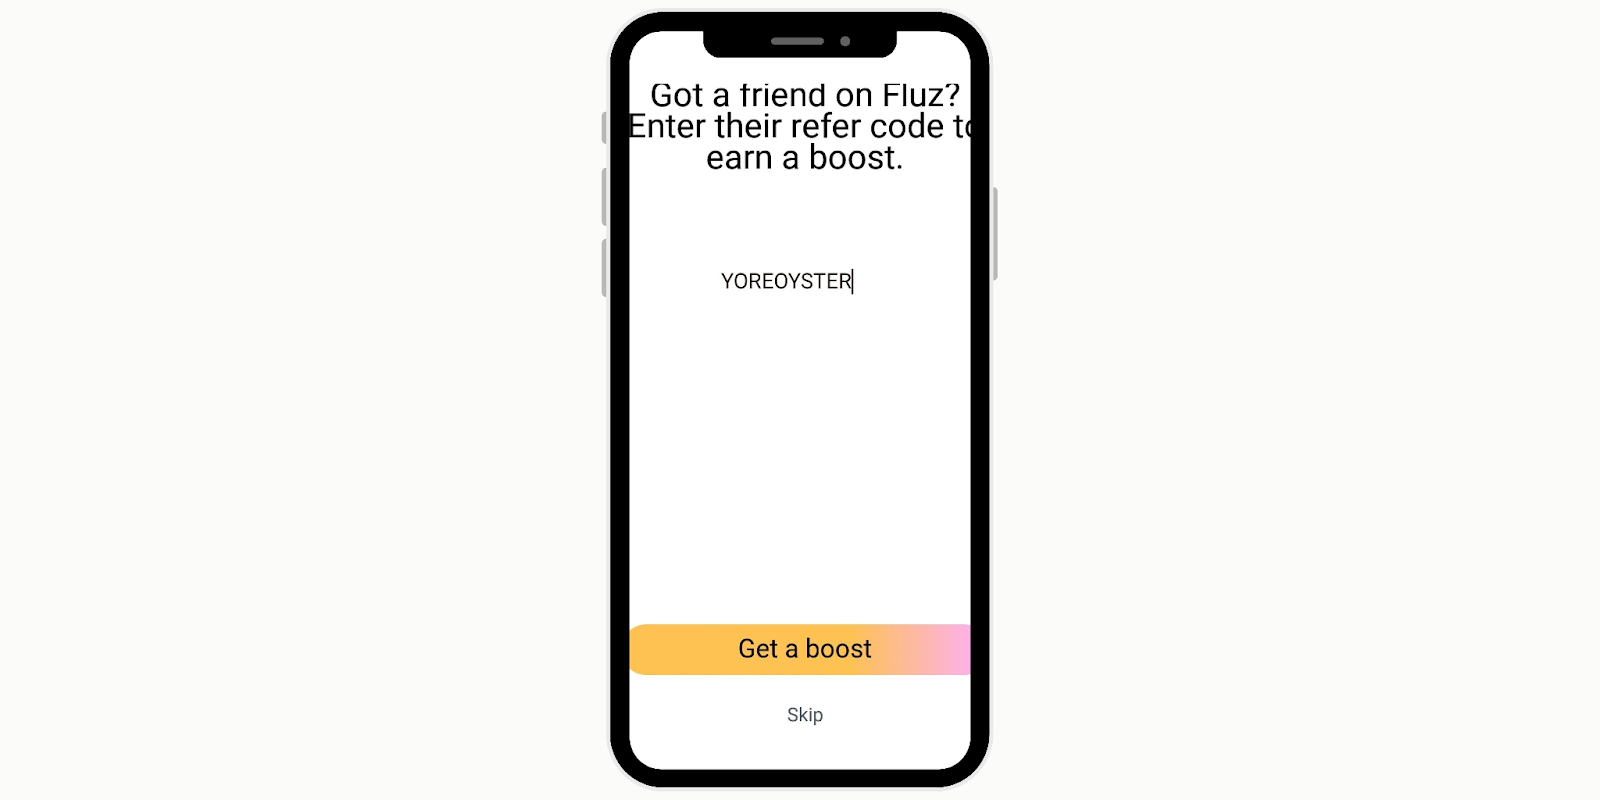 Fluz Referral Code YOREOYSTER + Get A Free $5 Sign-Up Bonus
